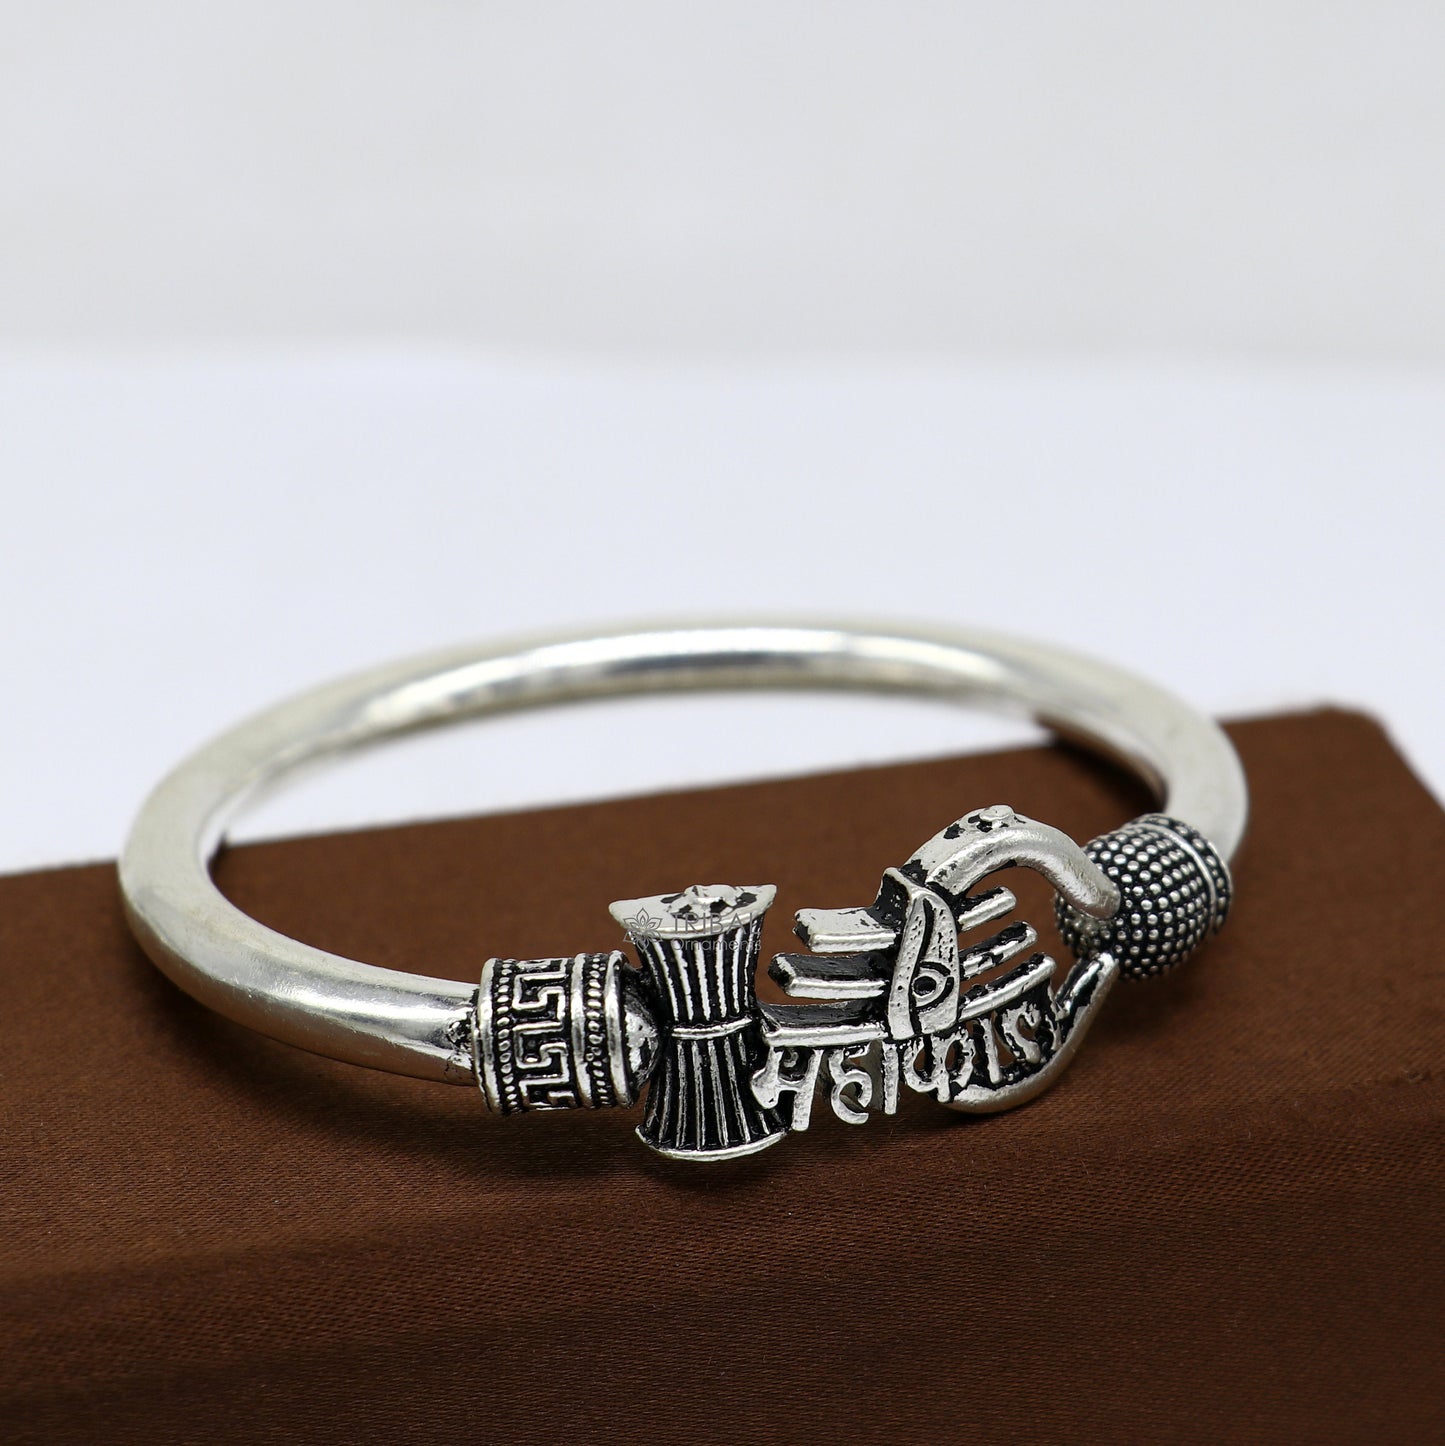 Handmade Sterling silver Lord Shiva Trident Kada Mahakal bracelet, Rudraksh bracelet, customized babhubali bangle kada giftig jewelry nsk697 - TRIBAL ORNAMENTS